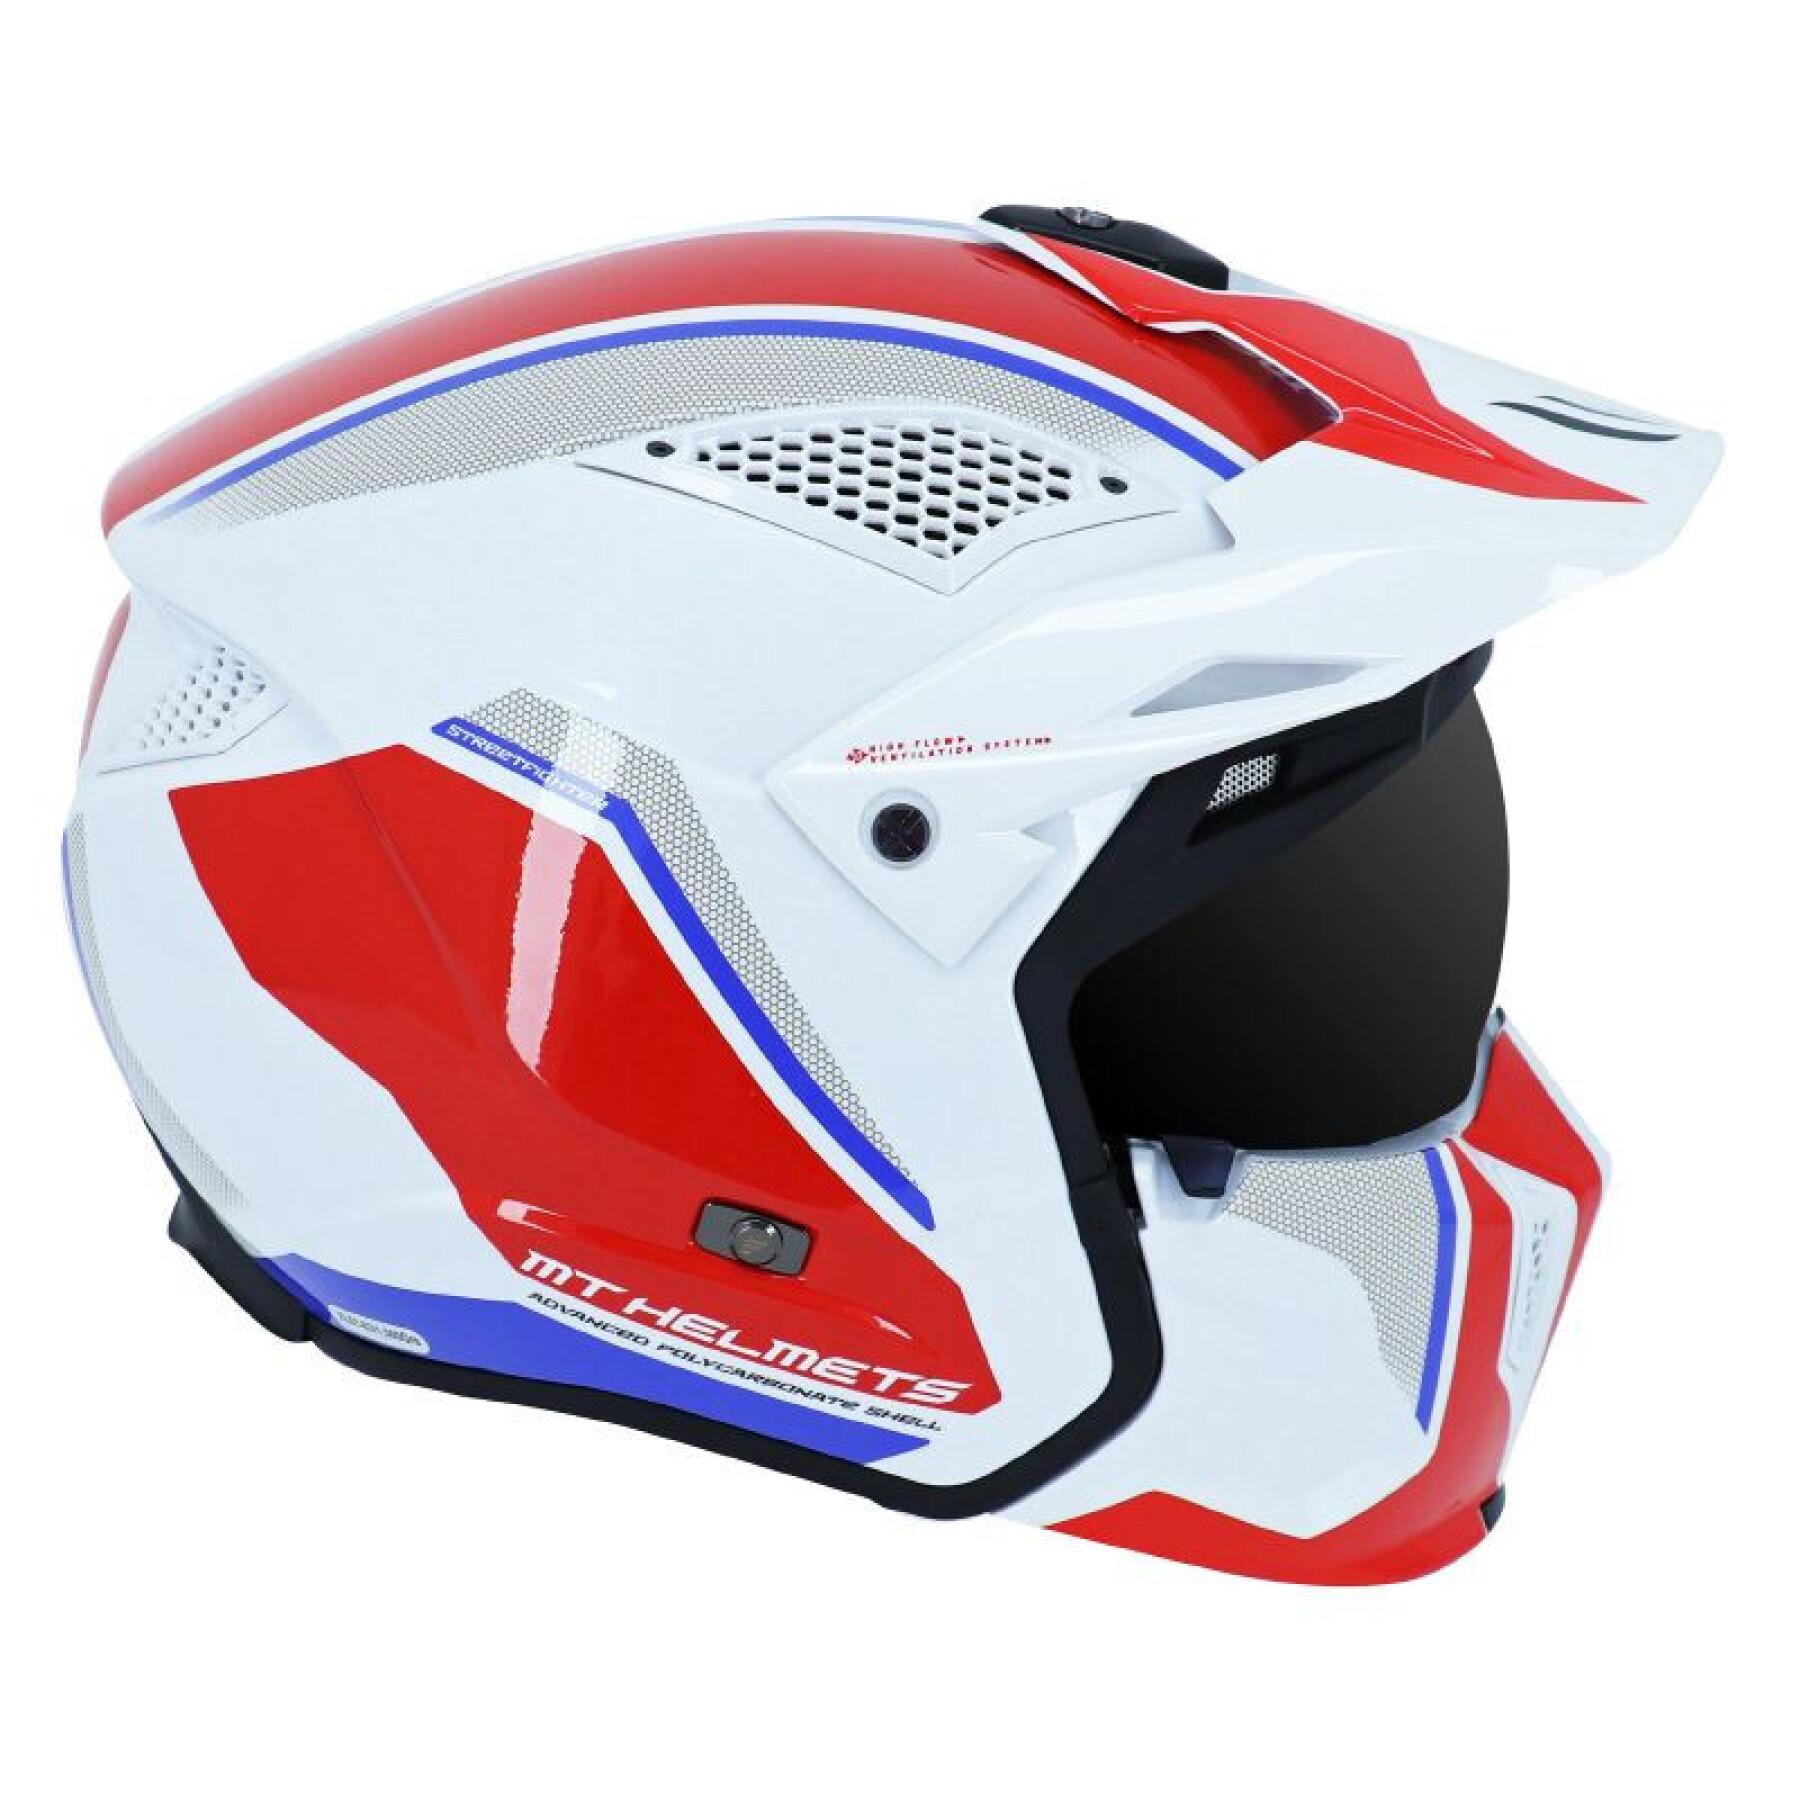 Casco oscuro convertible de pantalla única con mentonera desmontable MT Helmets MT STREetFIGHTER SV SKULL(entregado con una pantalla azul adicional)